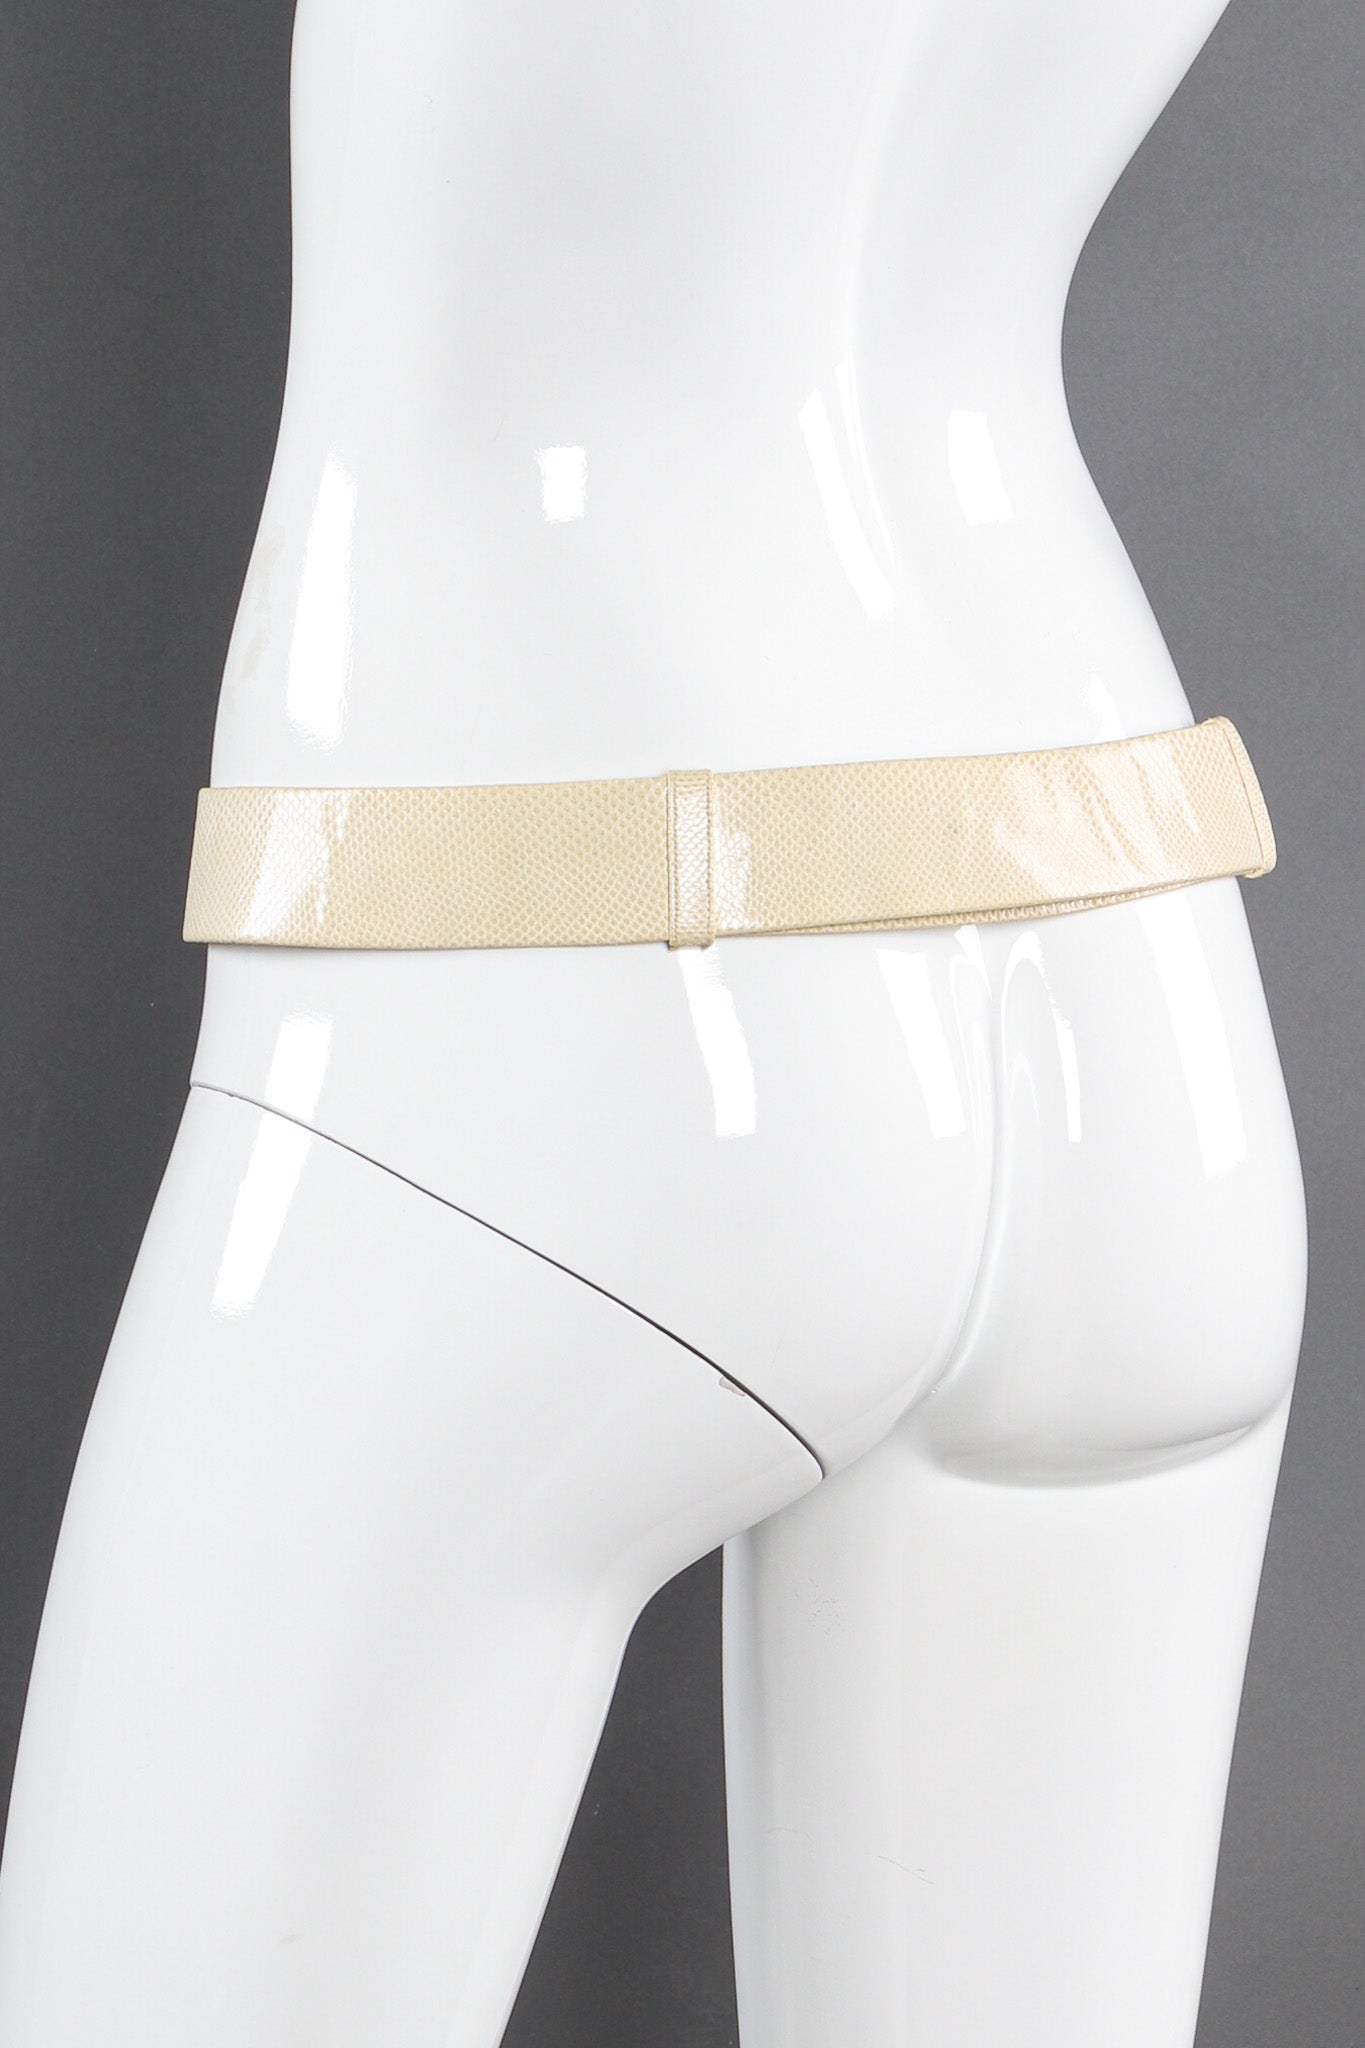 snakeskin slide belt by Finesse LaModel mannequin back @recessla